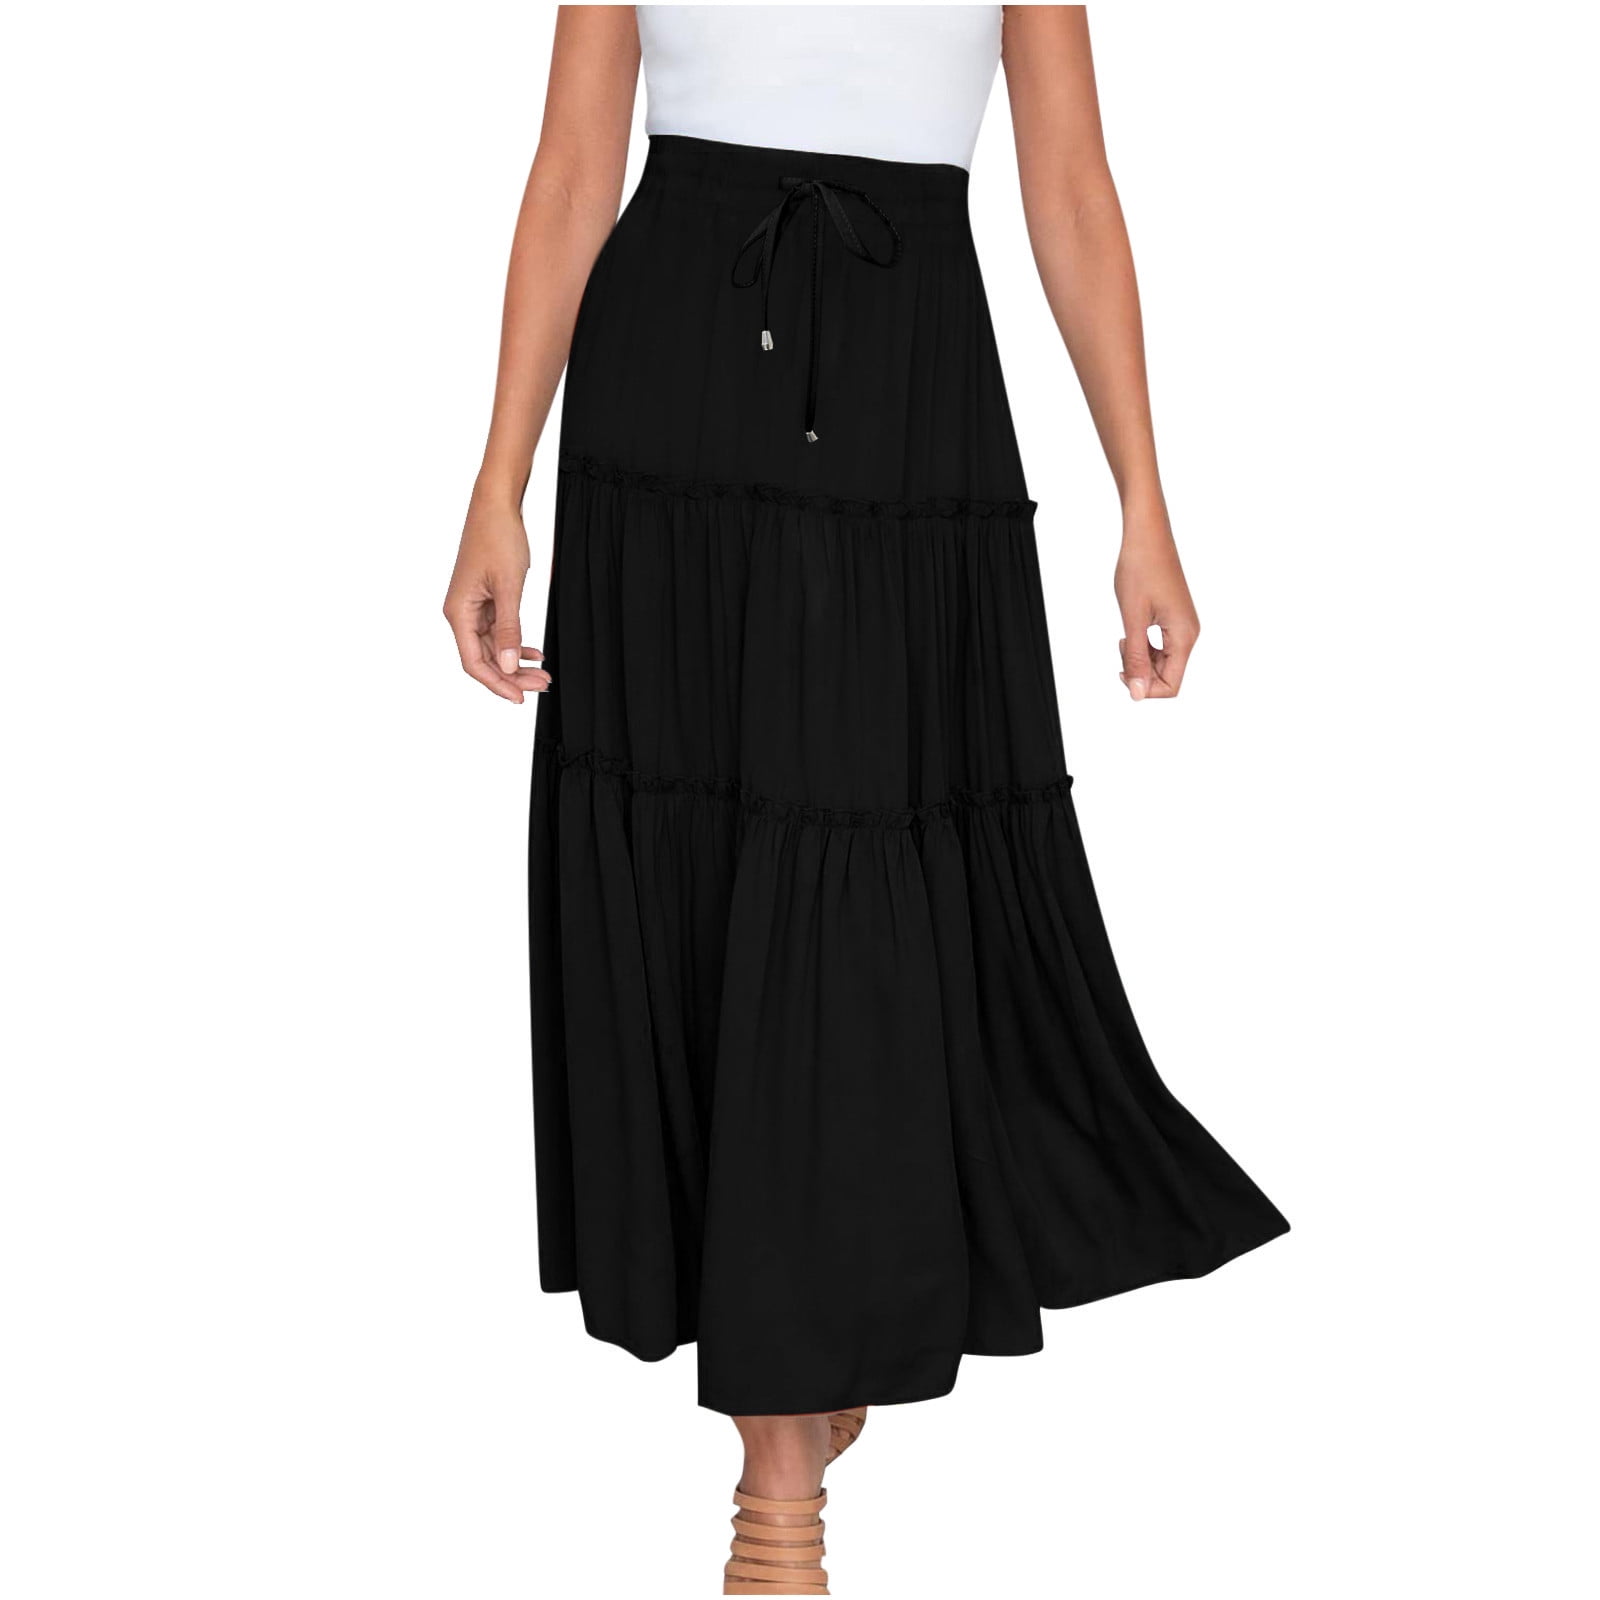 Mrat Slip Skirt Women Short Skirt Fashion Ladies Solid Casual Ruched ...